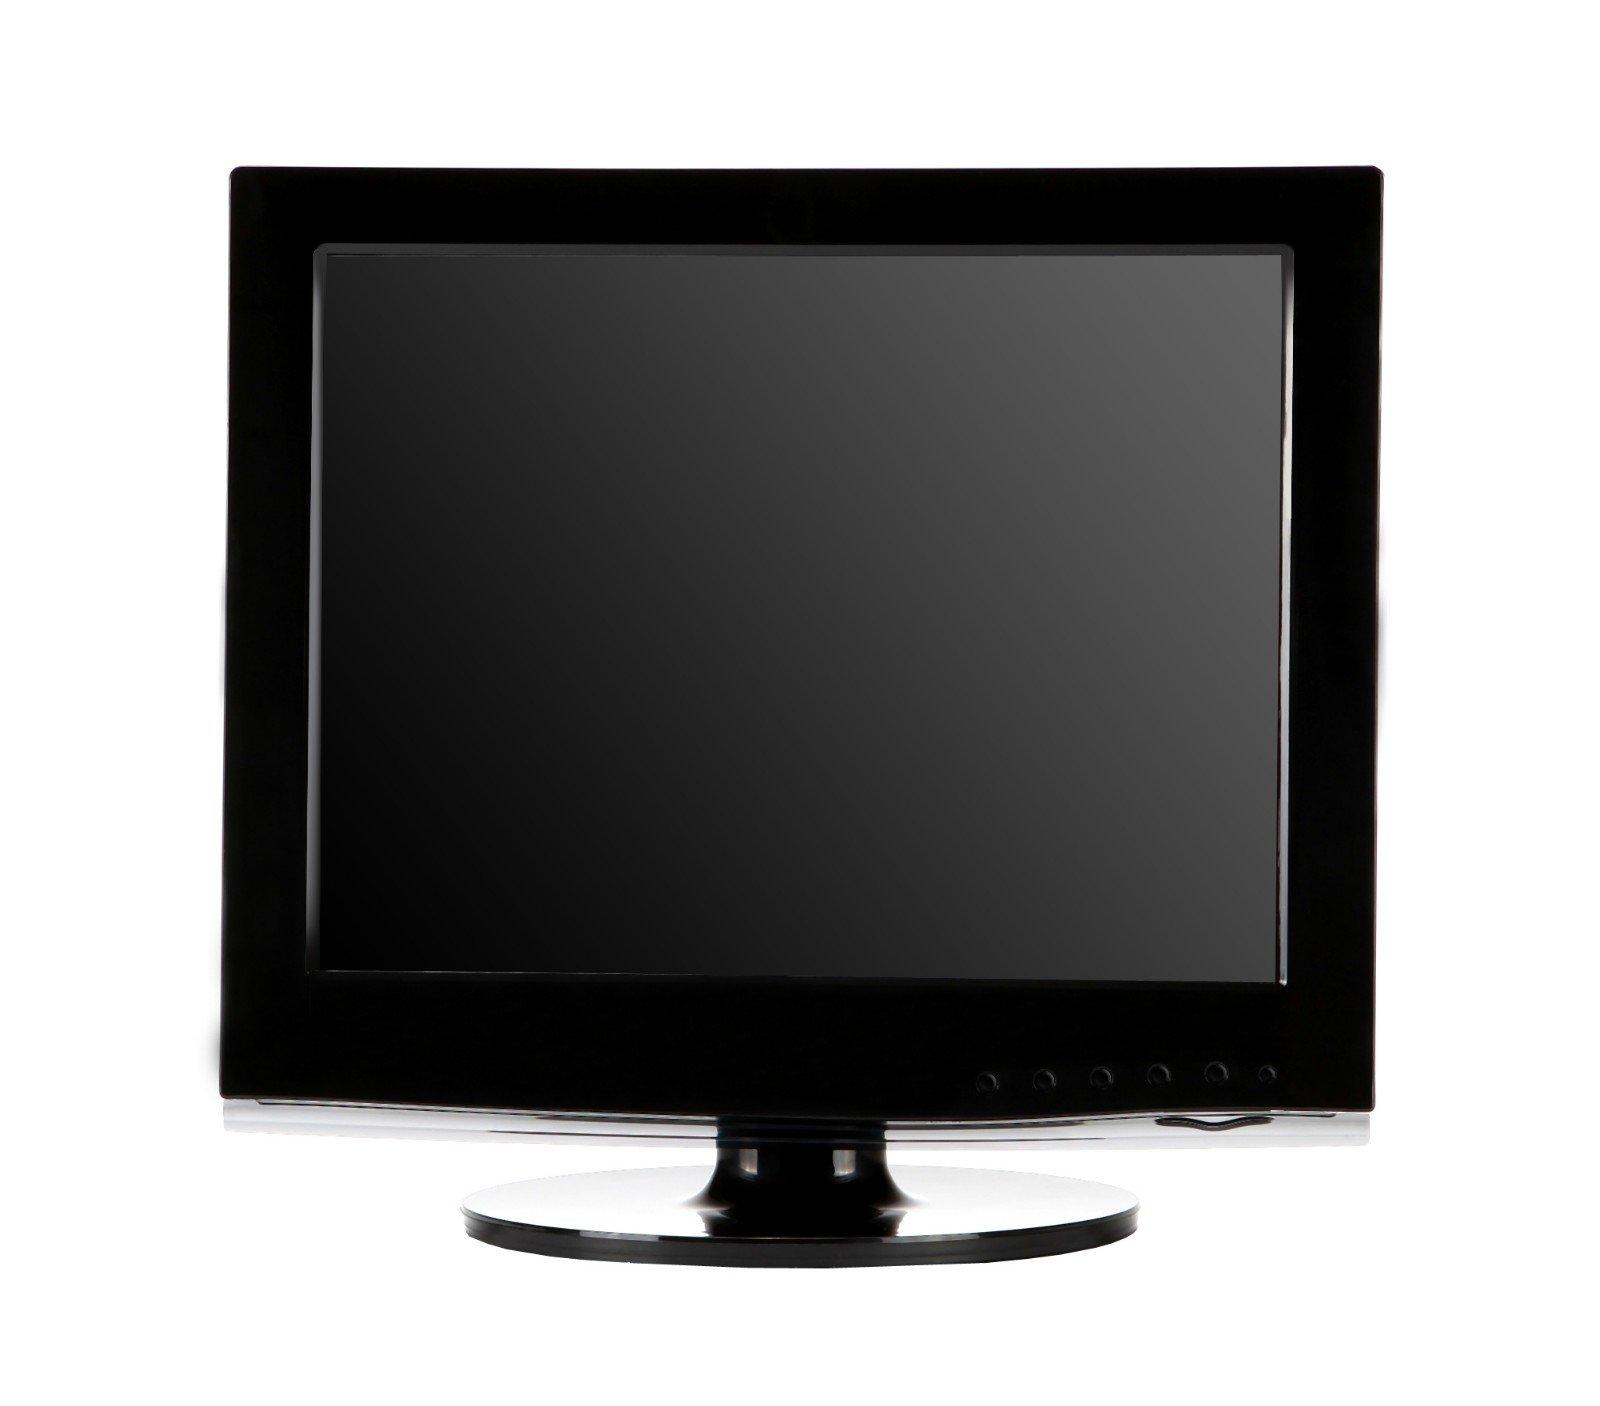 Hot 15 inch lcd monitor screen Xinyao LCD Brand